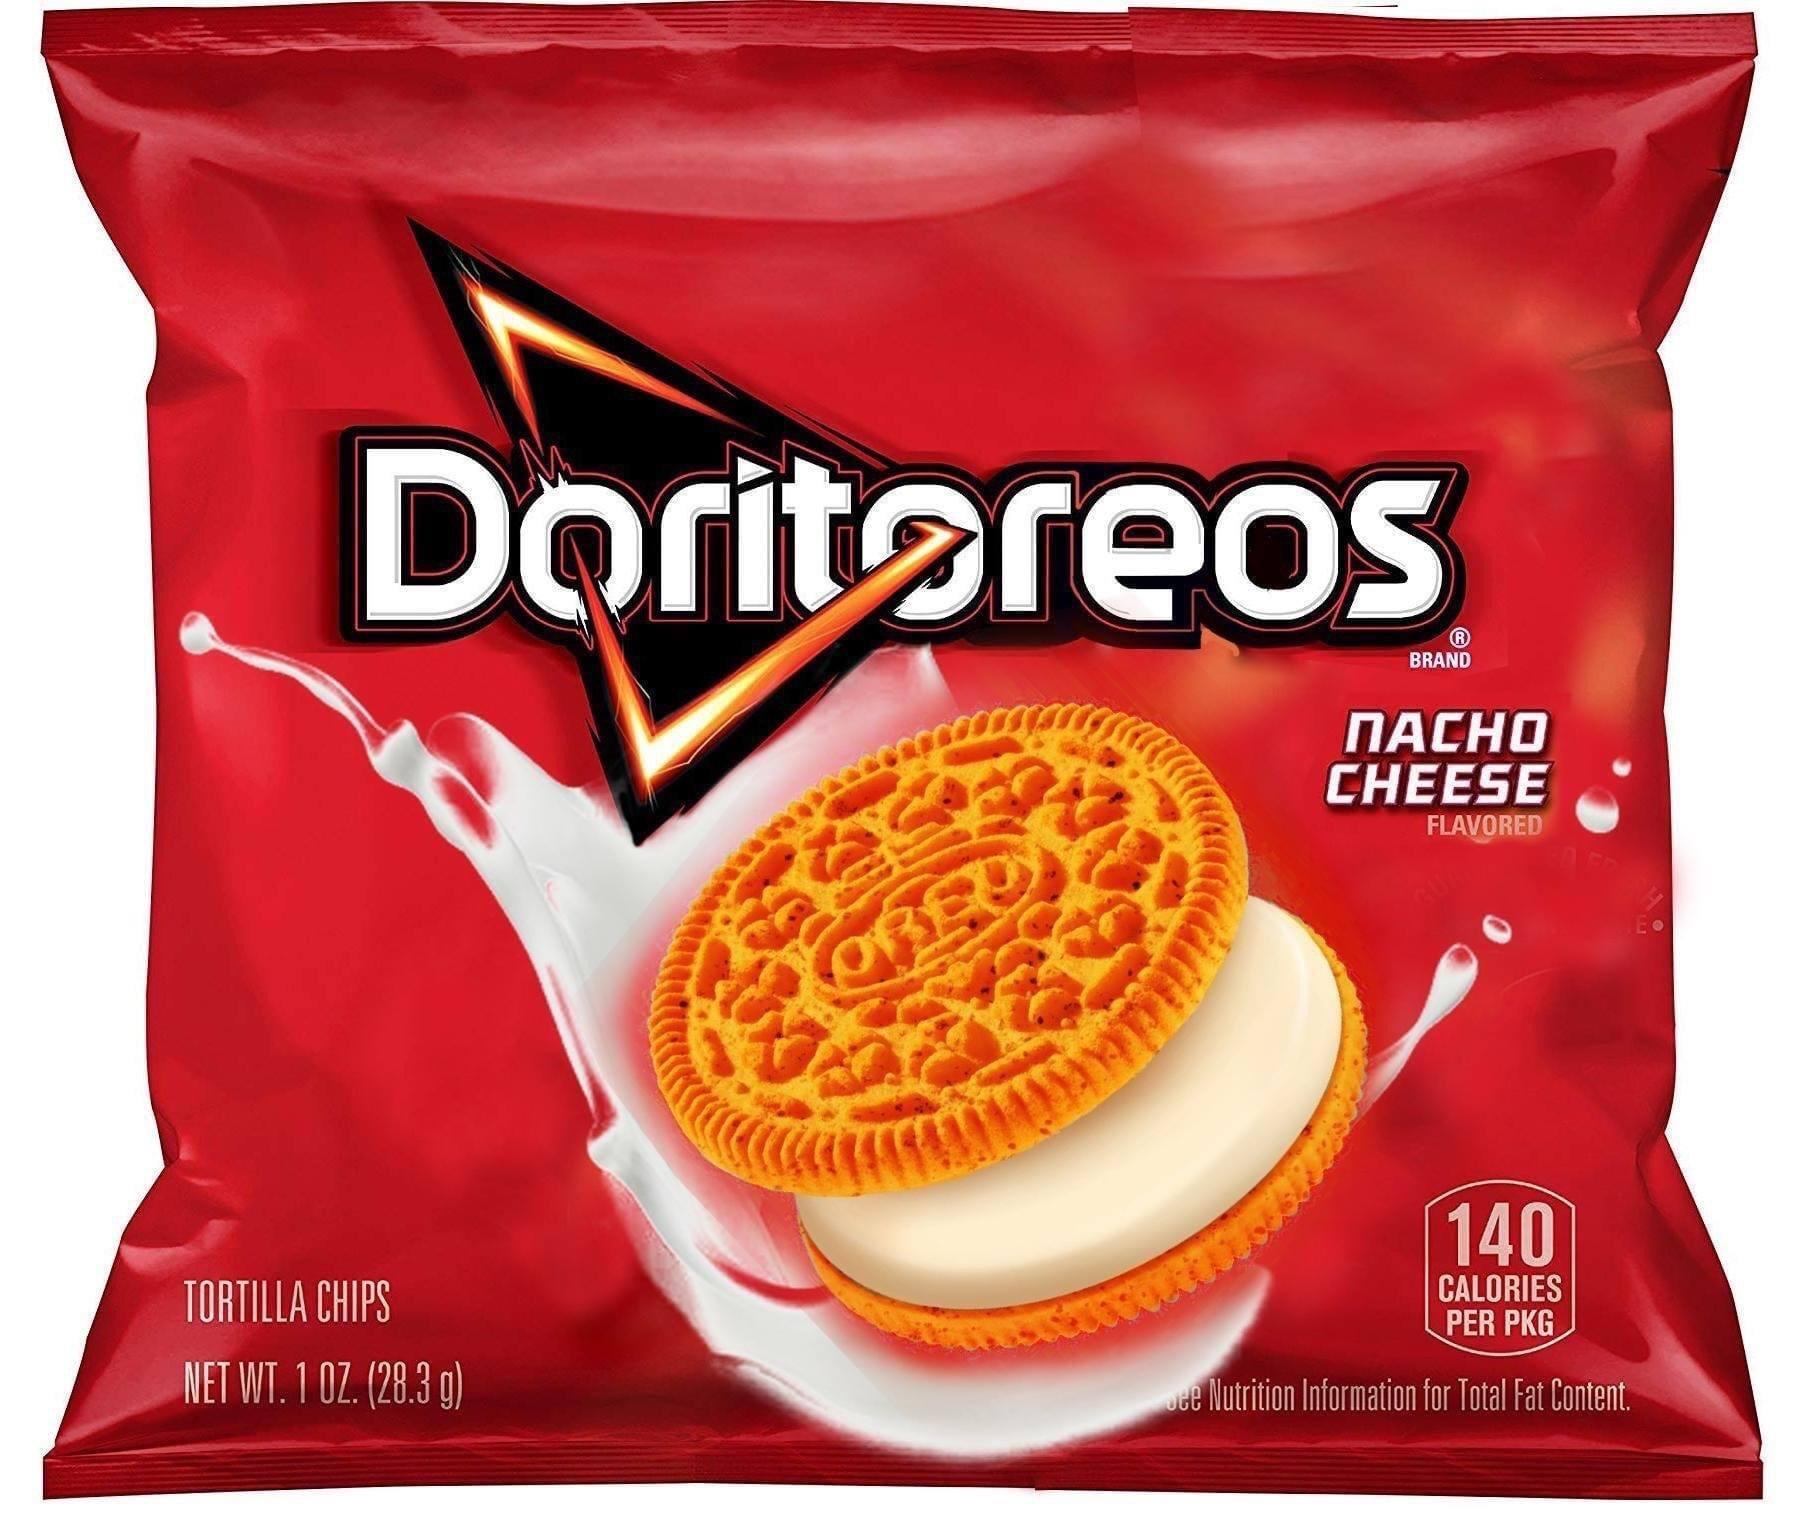 doritos oreos - Doritareos 6 Brand Cheese Flavored 140 Calories Per Pkg Tortilla Chips Net Wt. 1 Oz. 28.39 ute Nutrition Information for Total Fat Content.